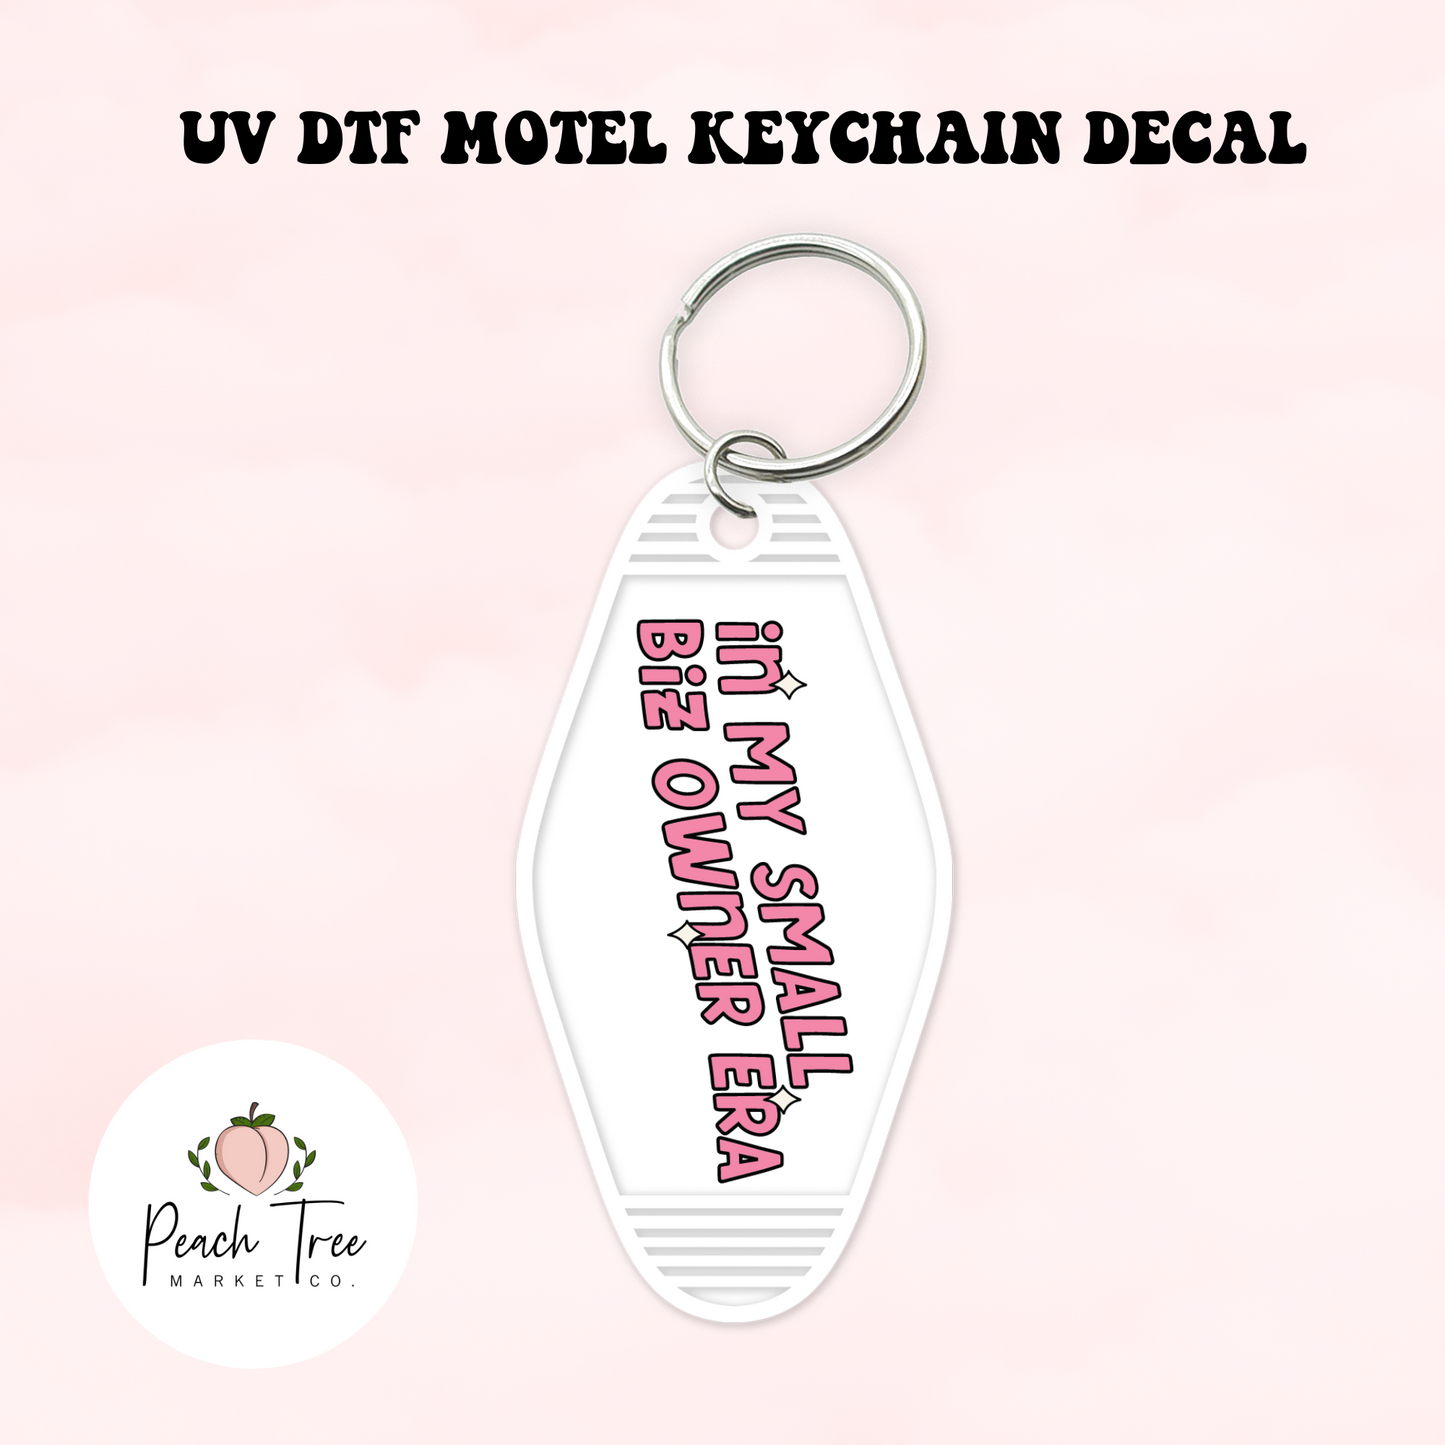 Small Biz Owner UV DTF Motel Keychain Decal